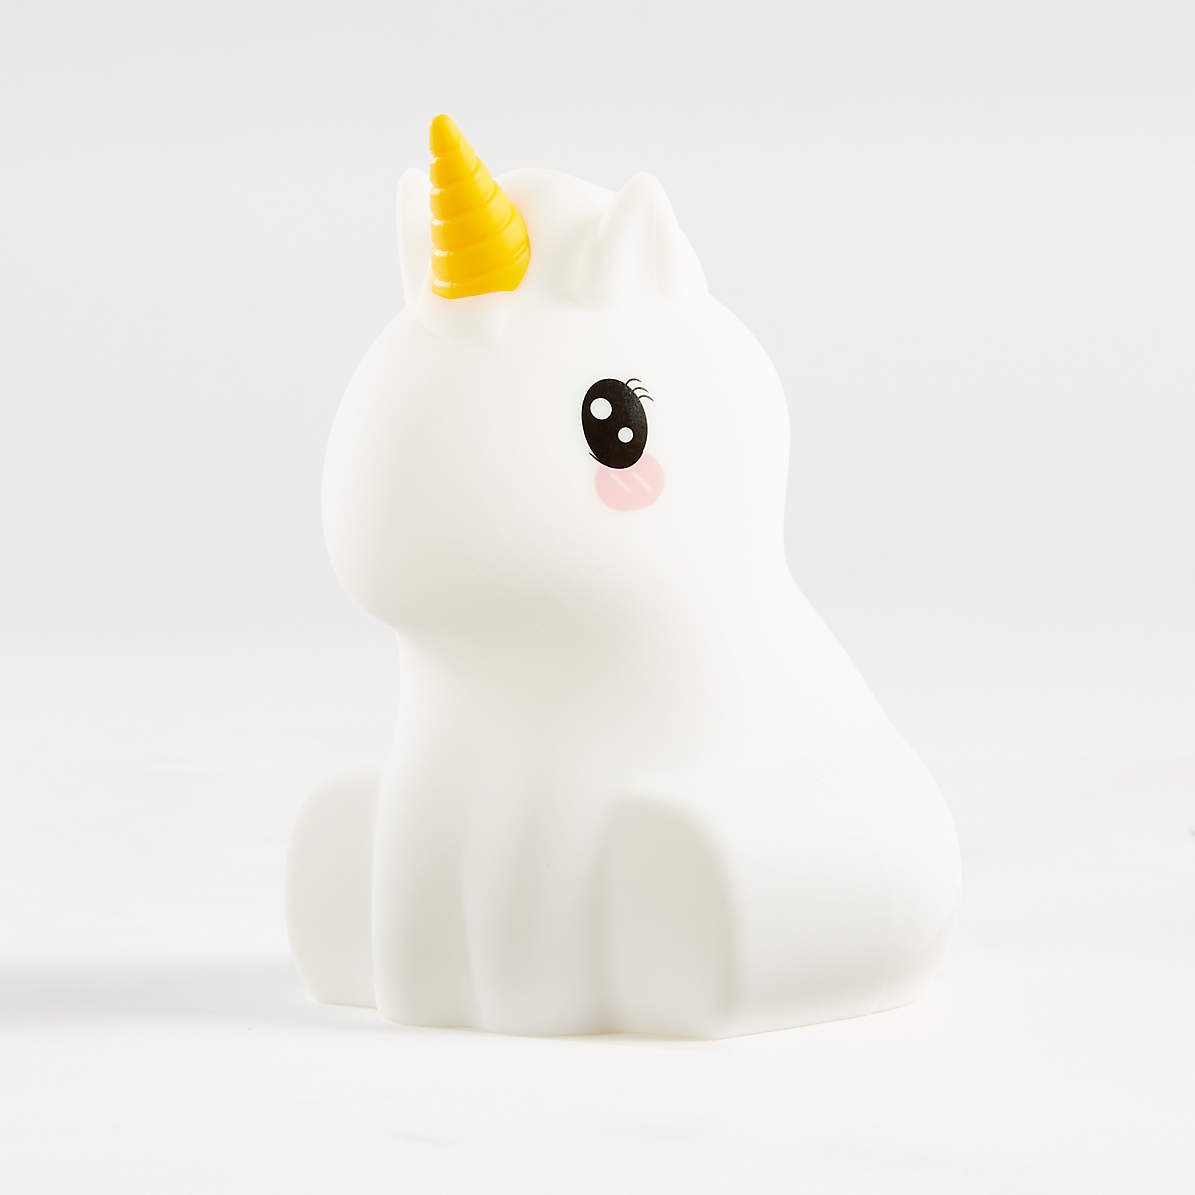 Lumi Pets Unicorn Night Light + Reviews